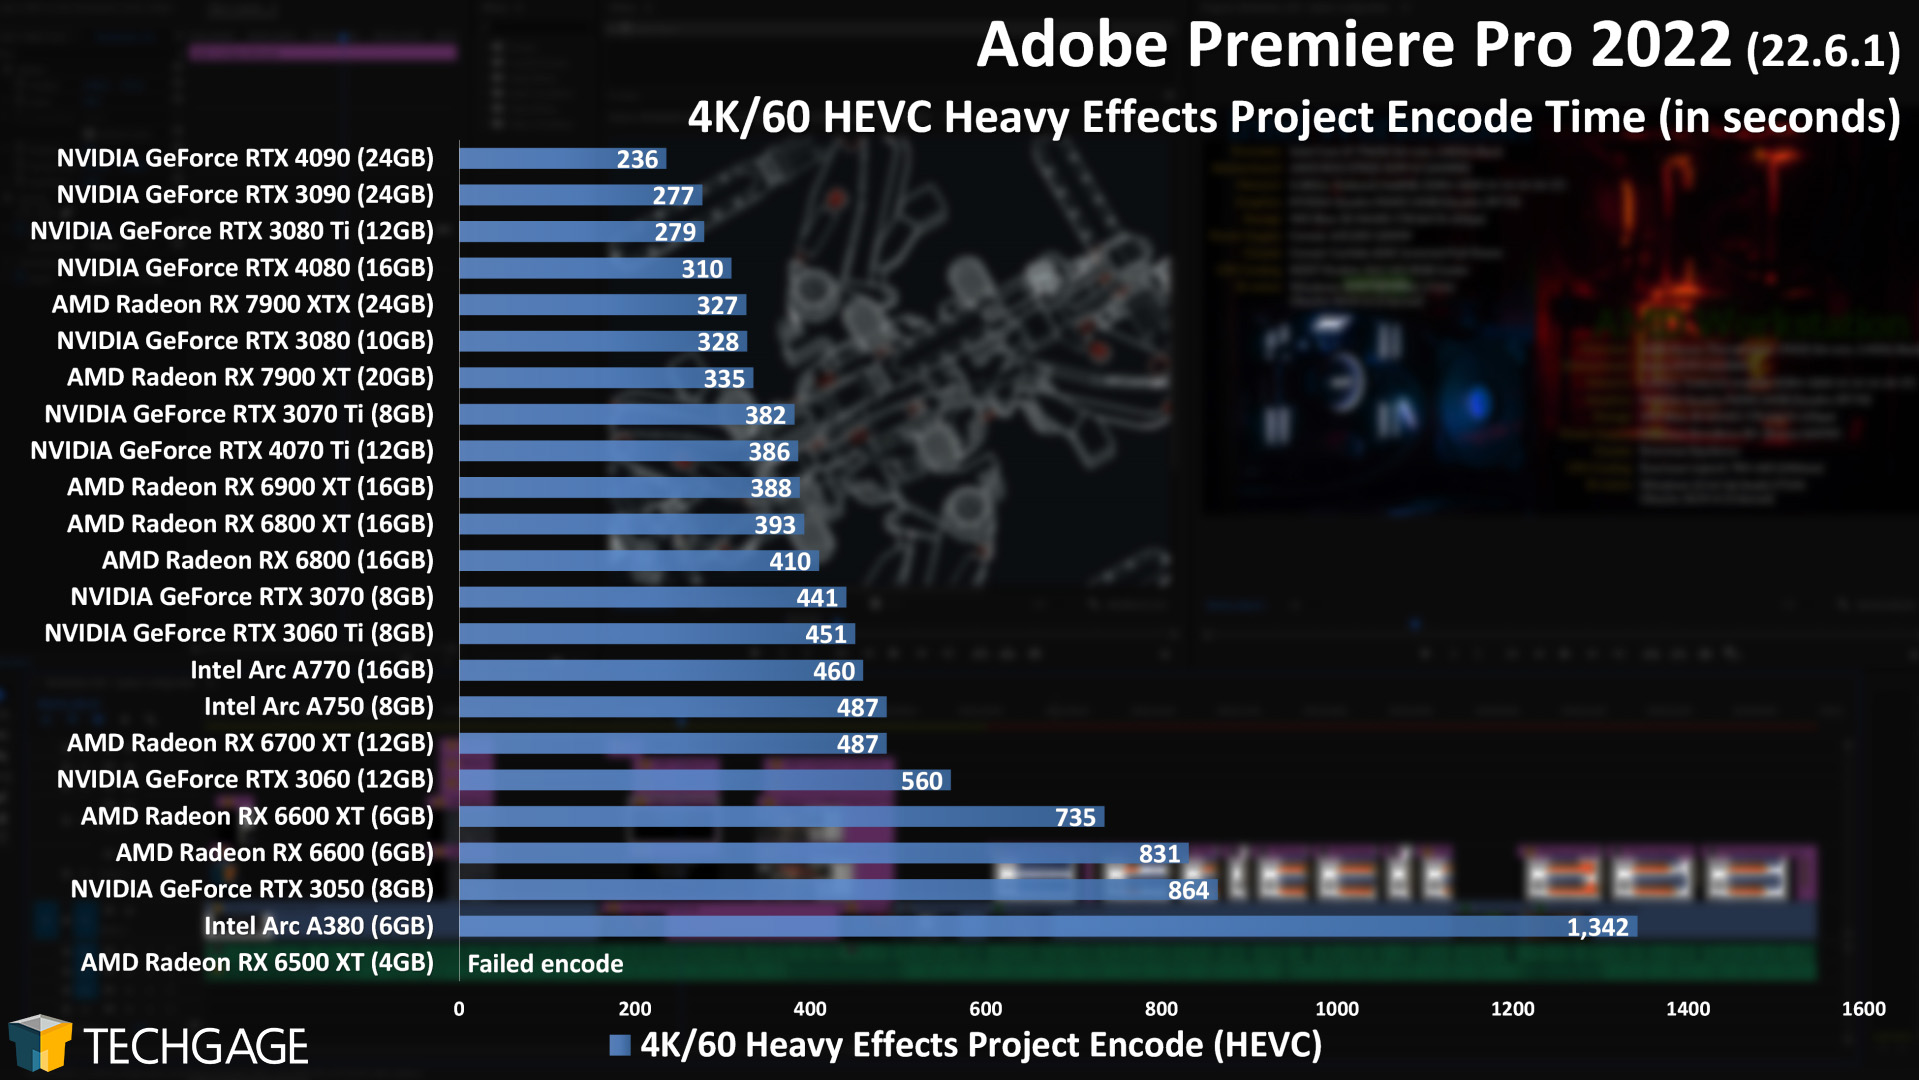 Adobe Premiere Pro - GPU Encoding Performance (4K Heavy Effects)